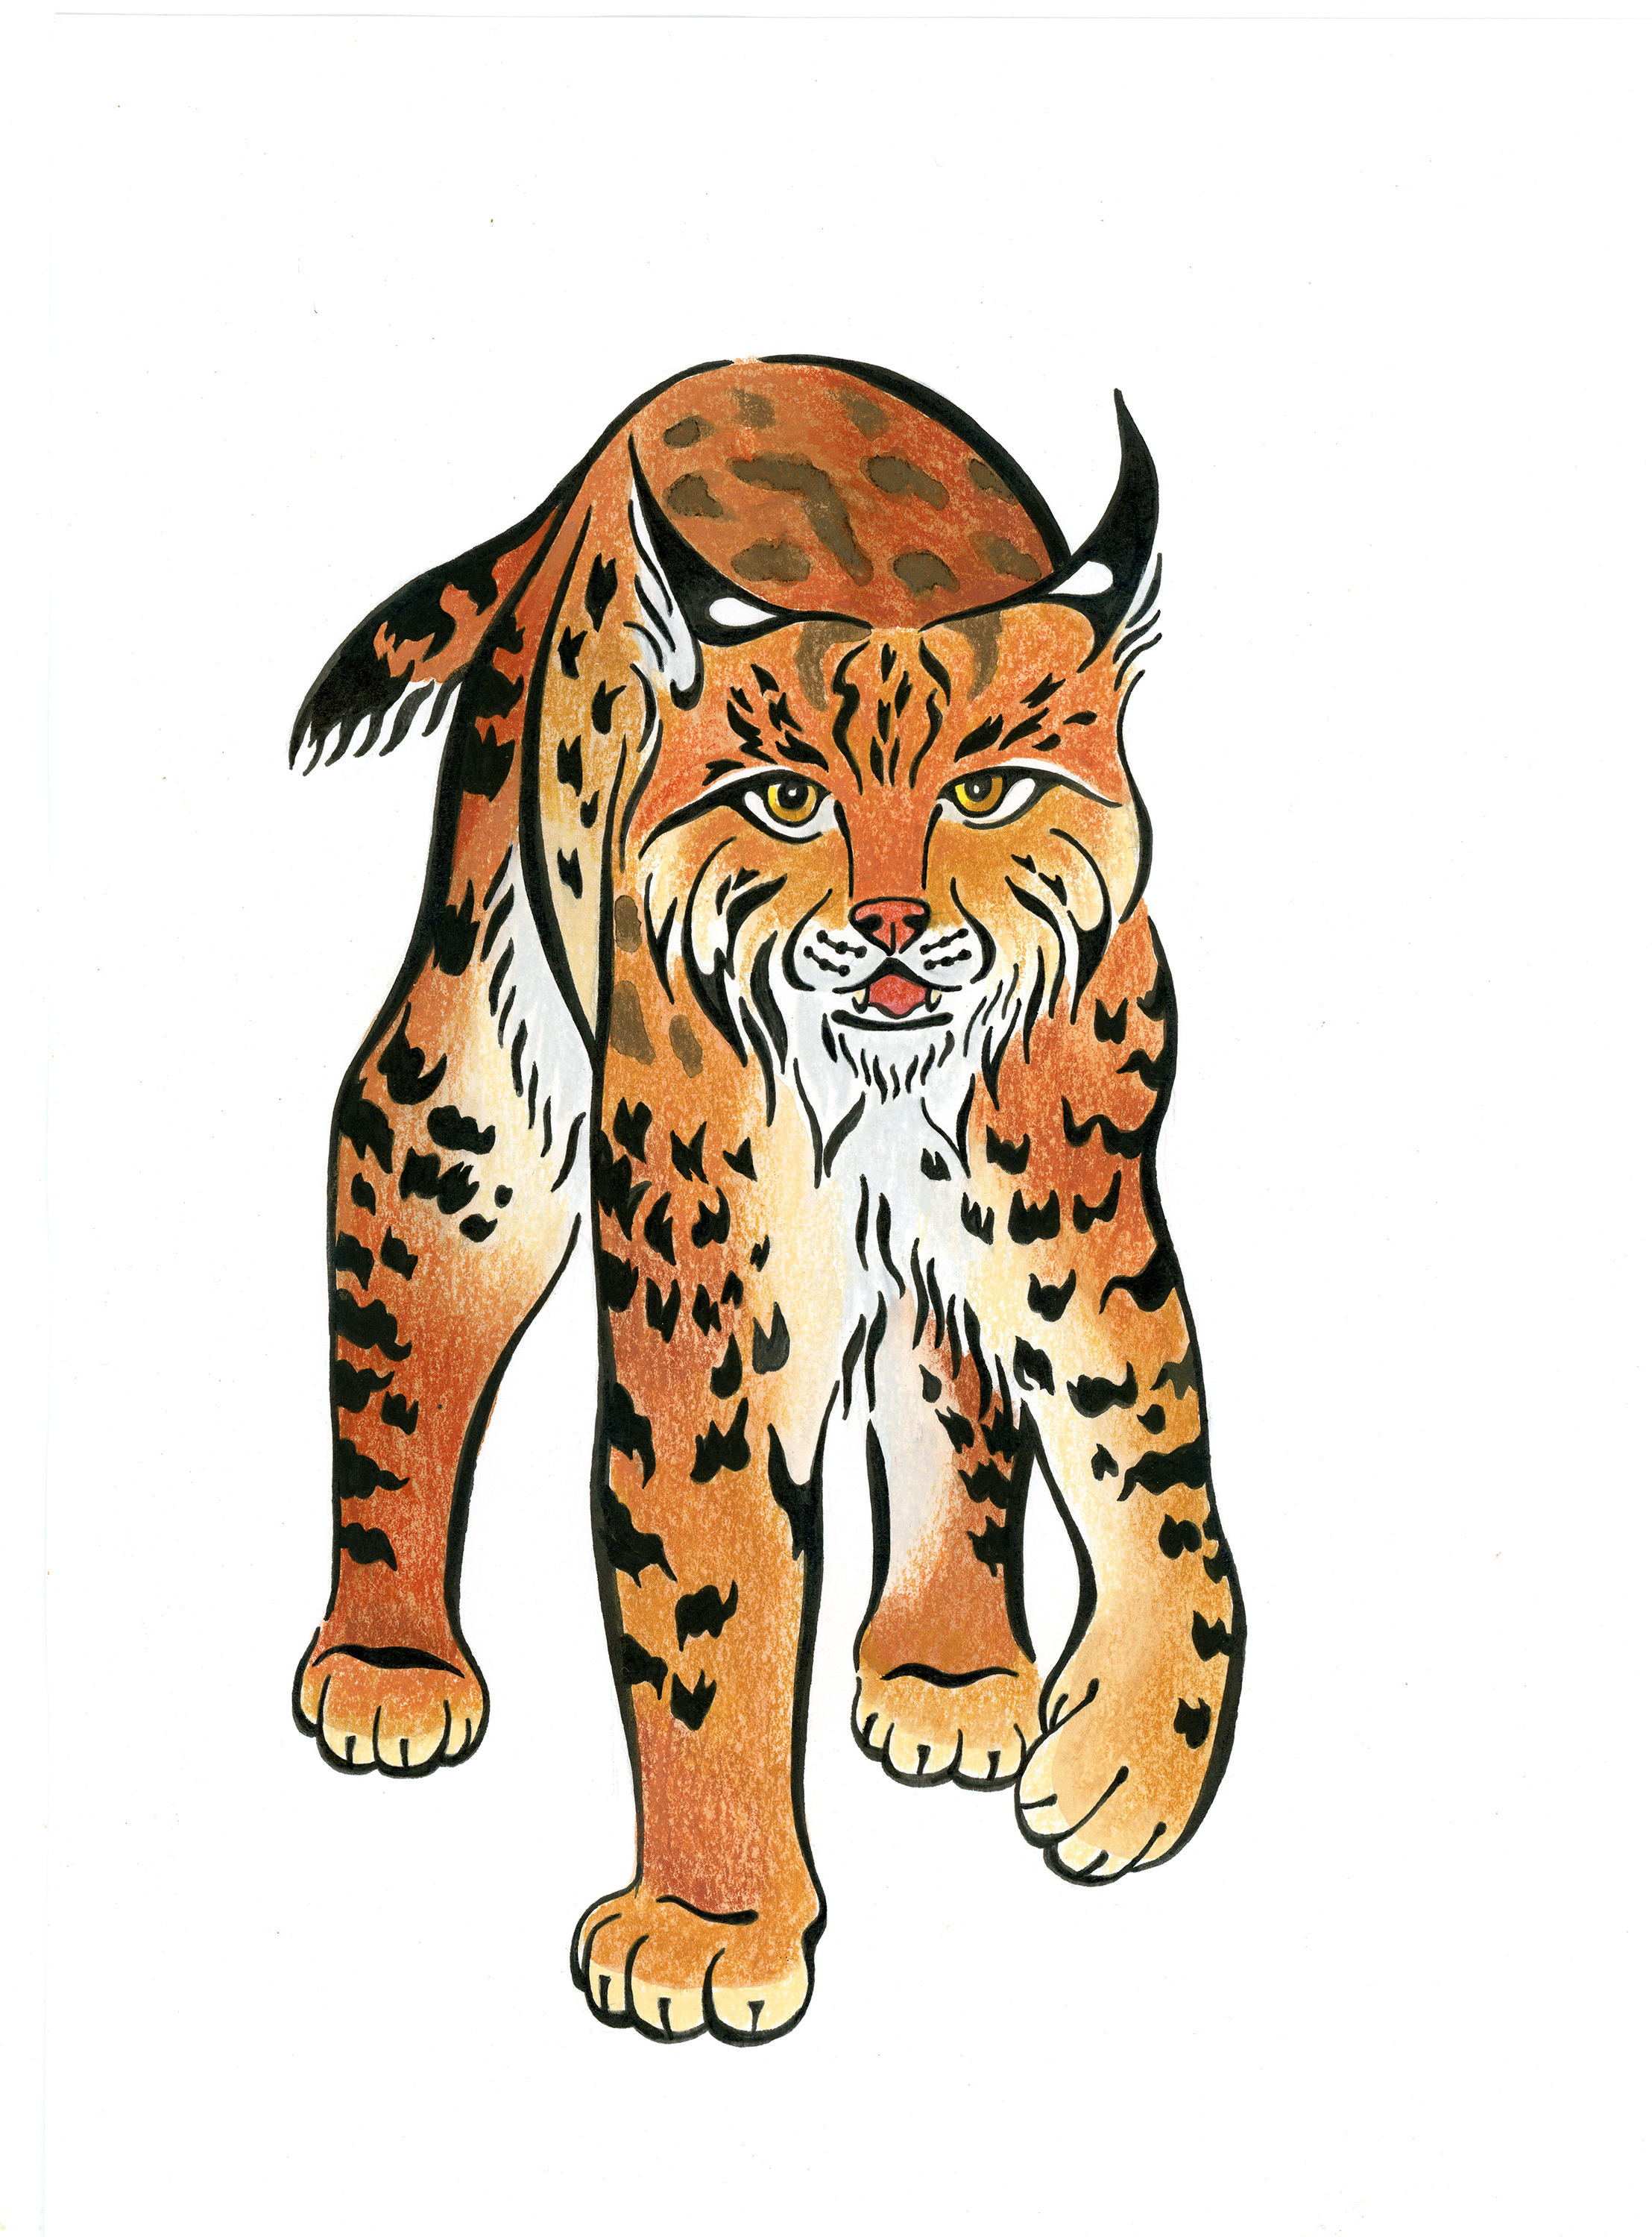 Illustration of an orange bobcat with black spots.